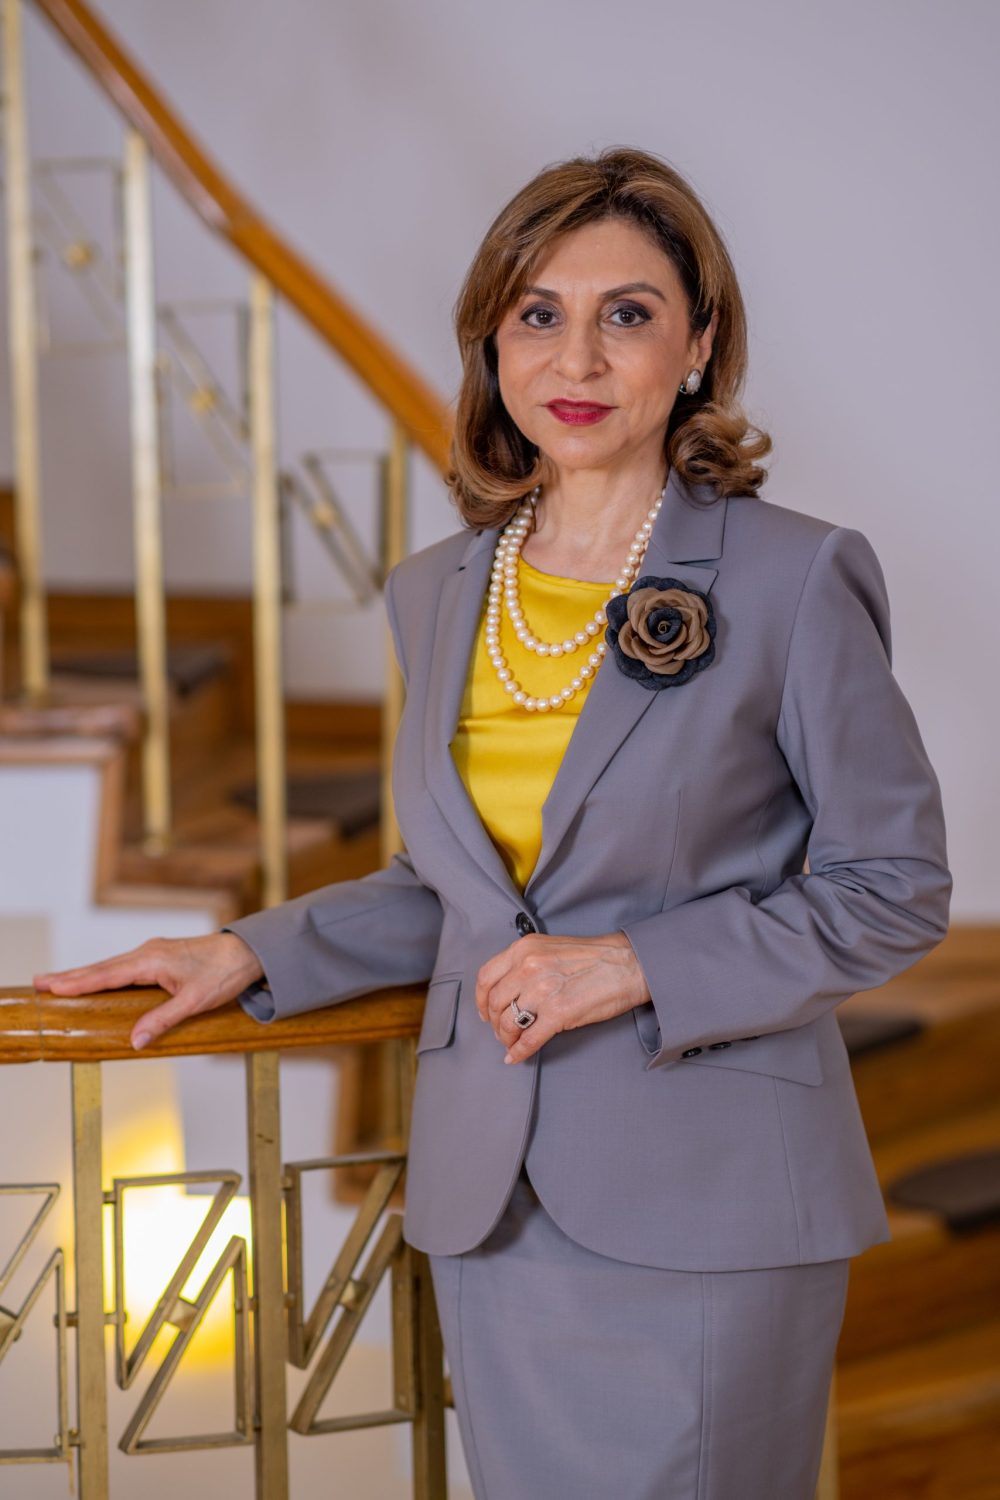 Florentina Șușnea, Managing Partner